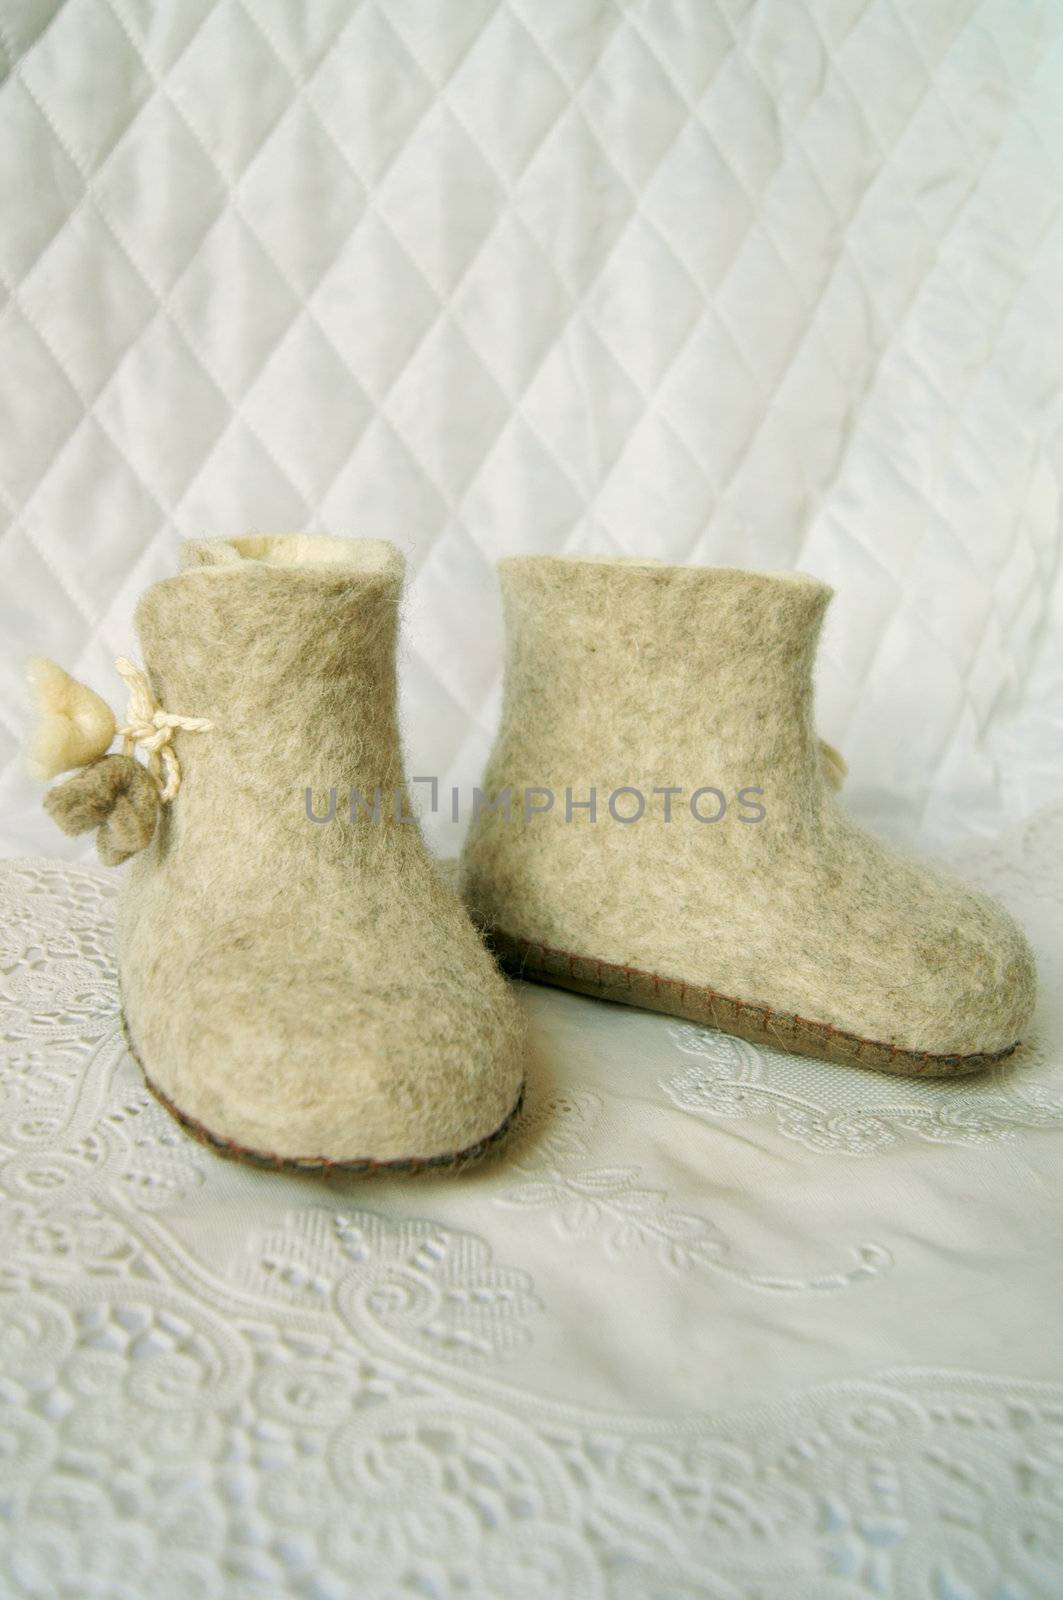 Felt soft gray boot, valenki isolated by lana_art